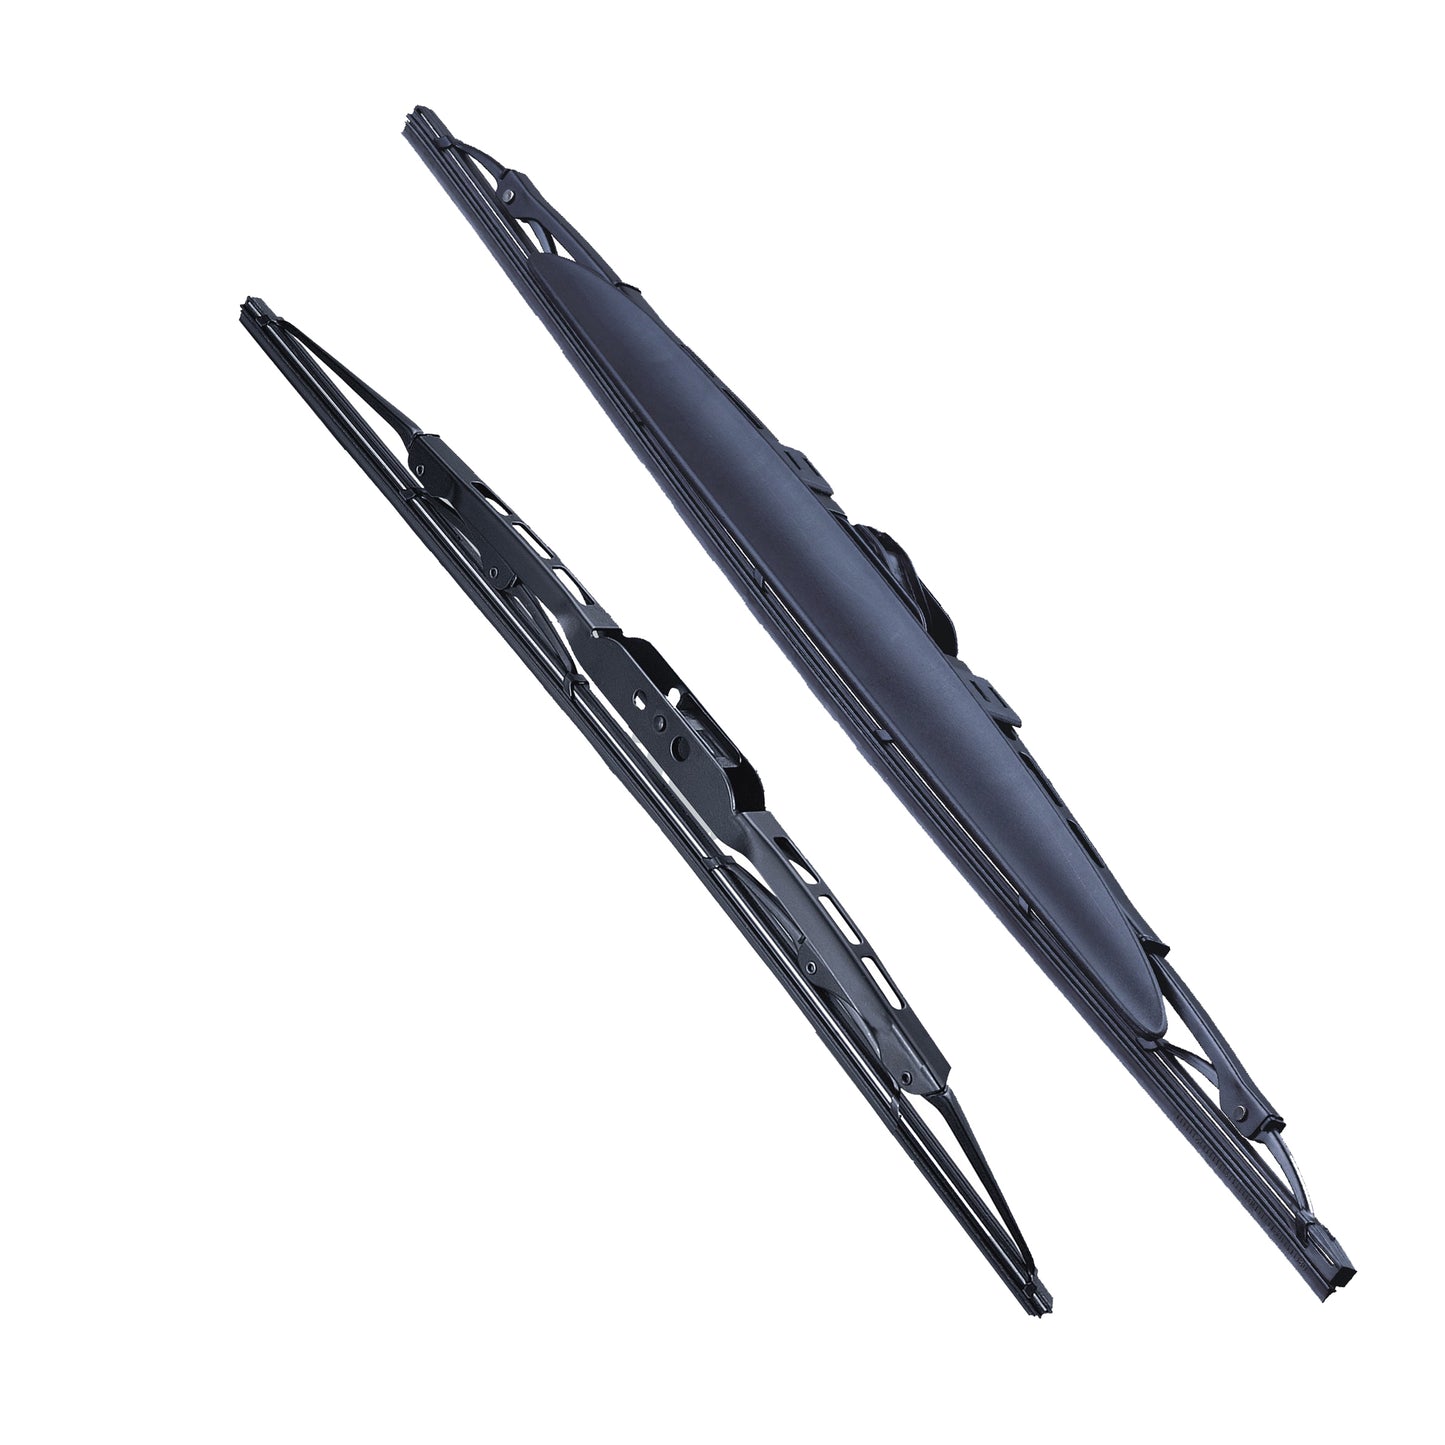 SUZUKI BALENO Hatchback Feb 2016 to Nov 2019 Wiper Blade Kit